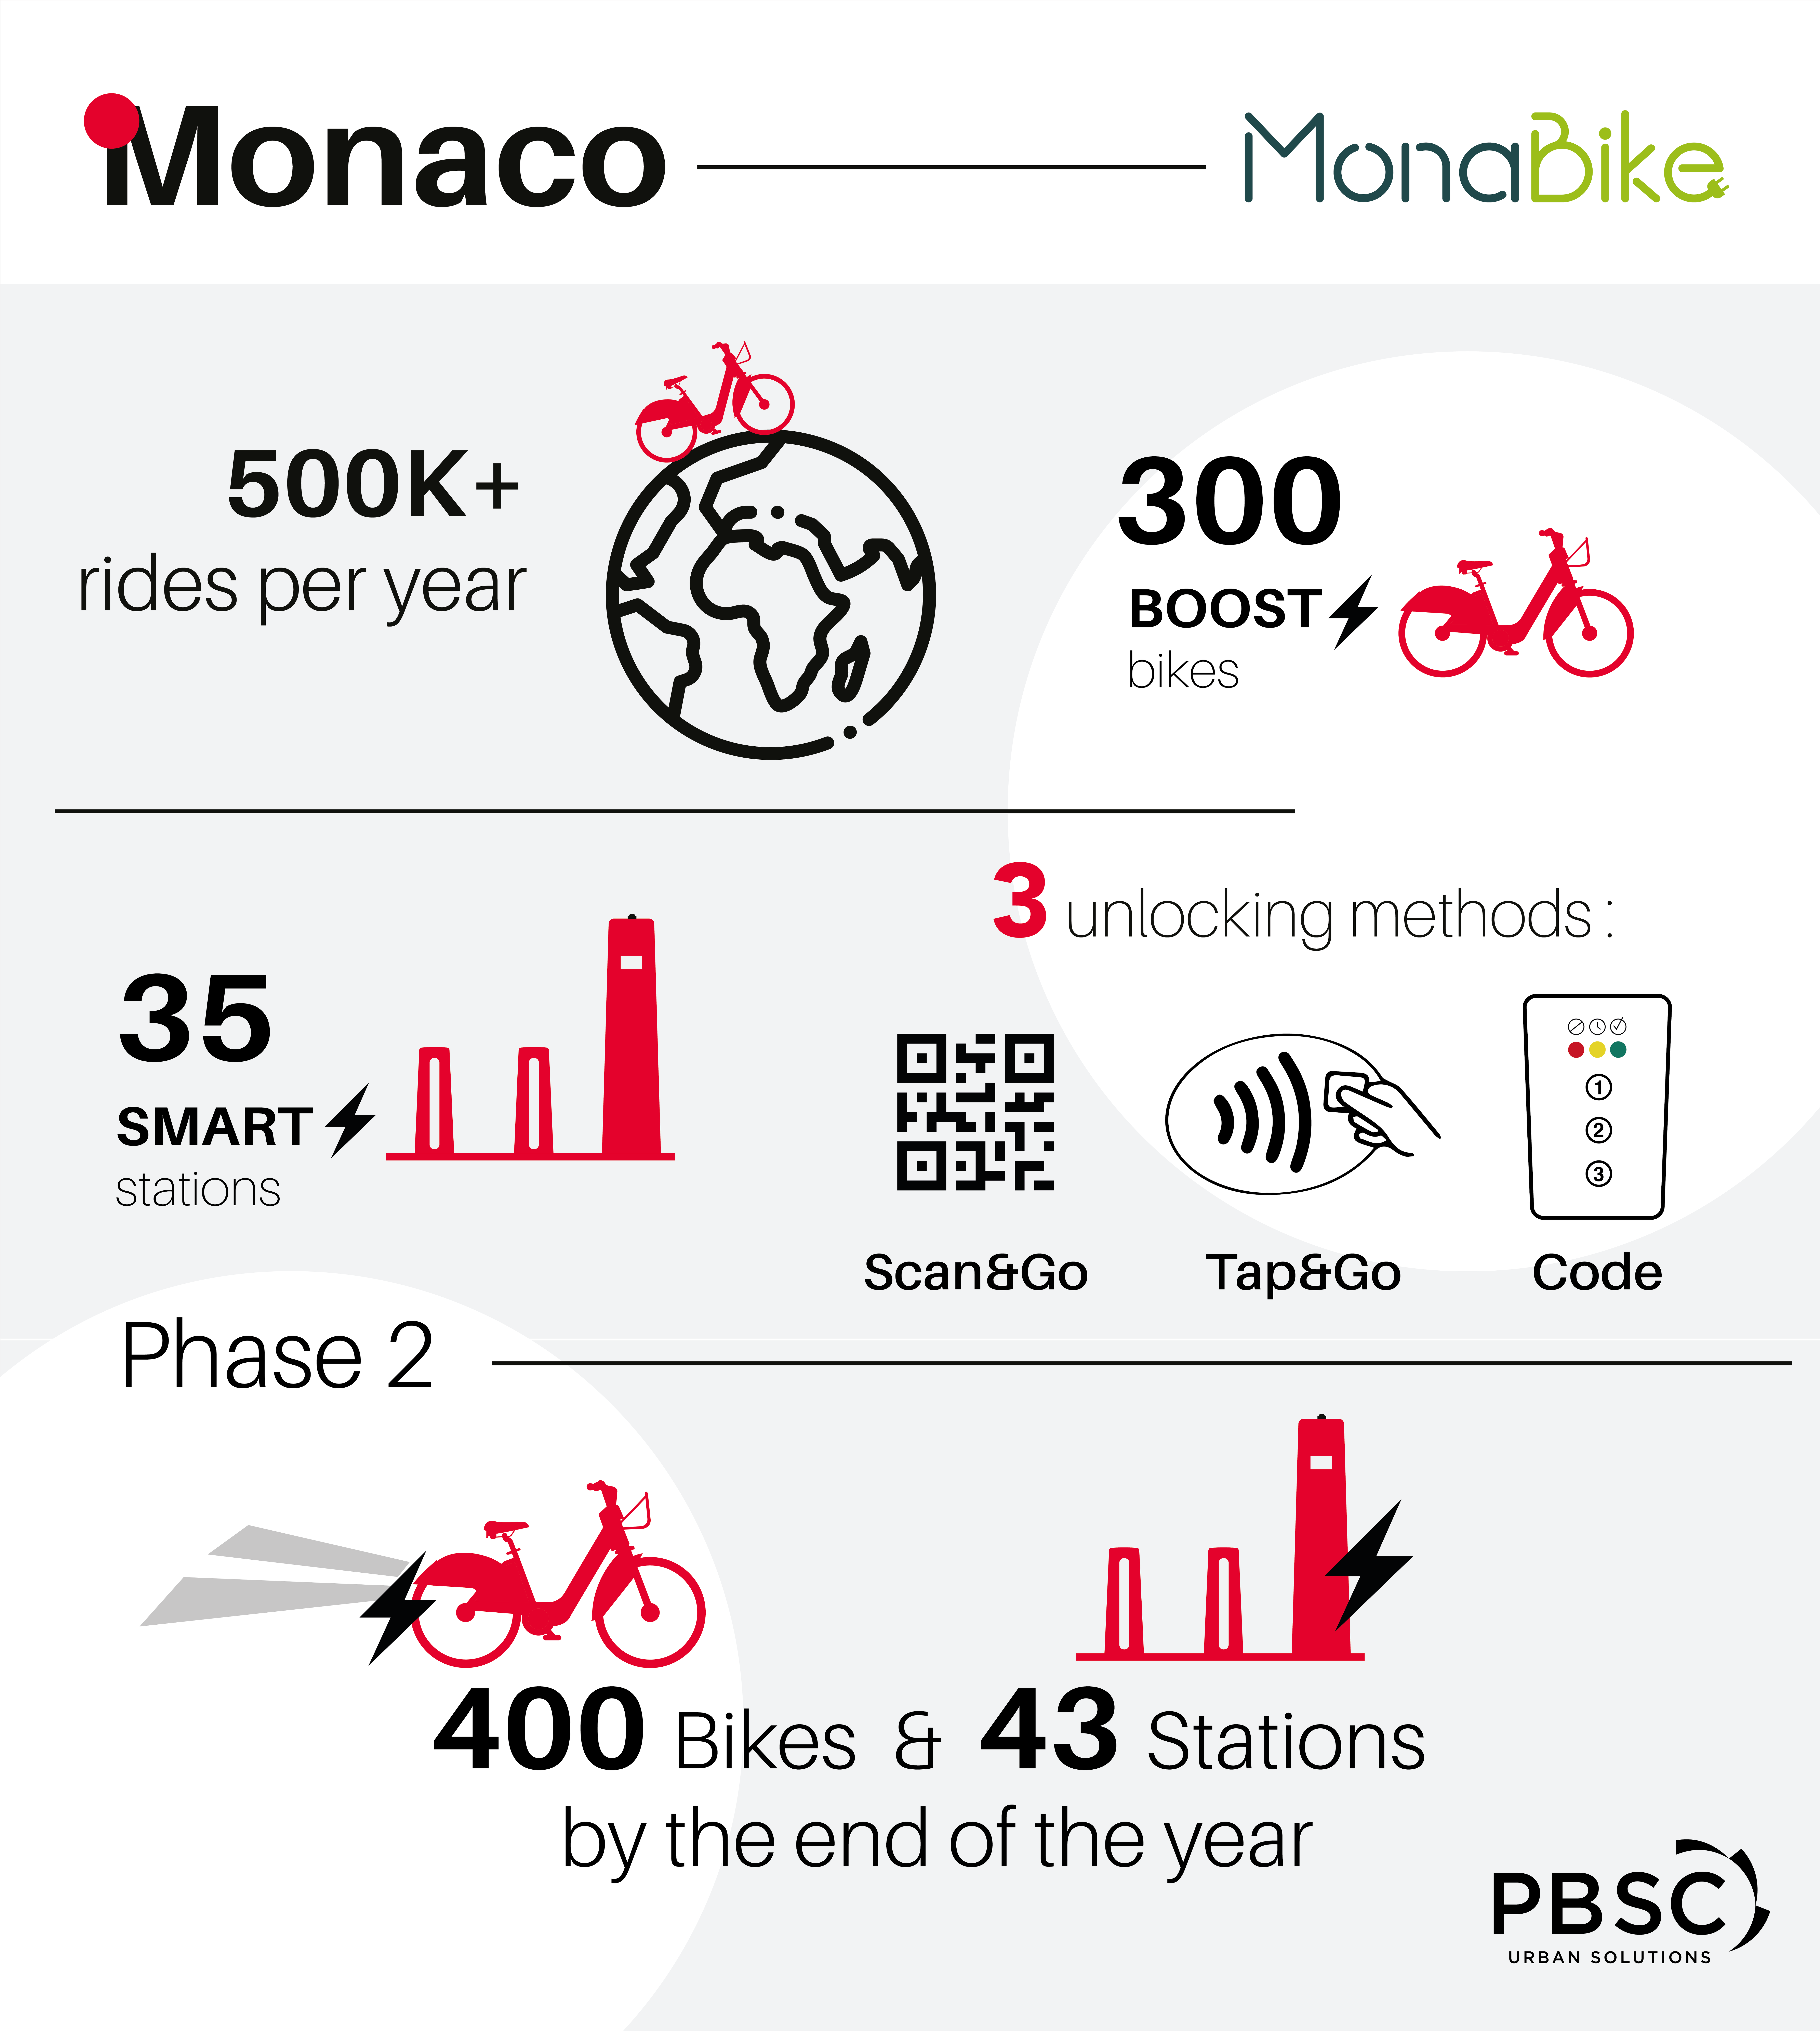 infographic-monaco-01-01.png (1.77 MB)